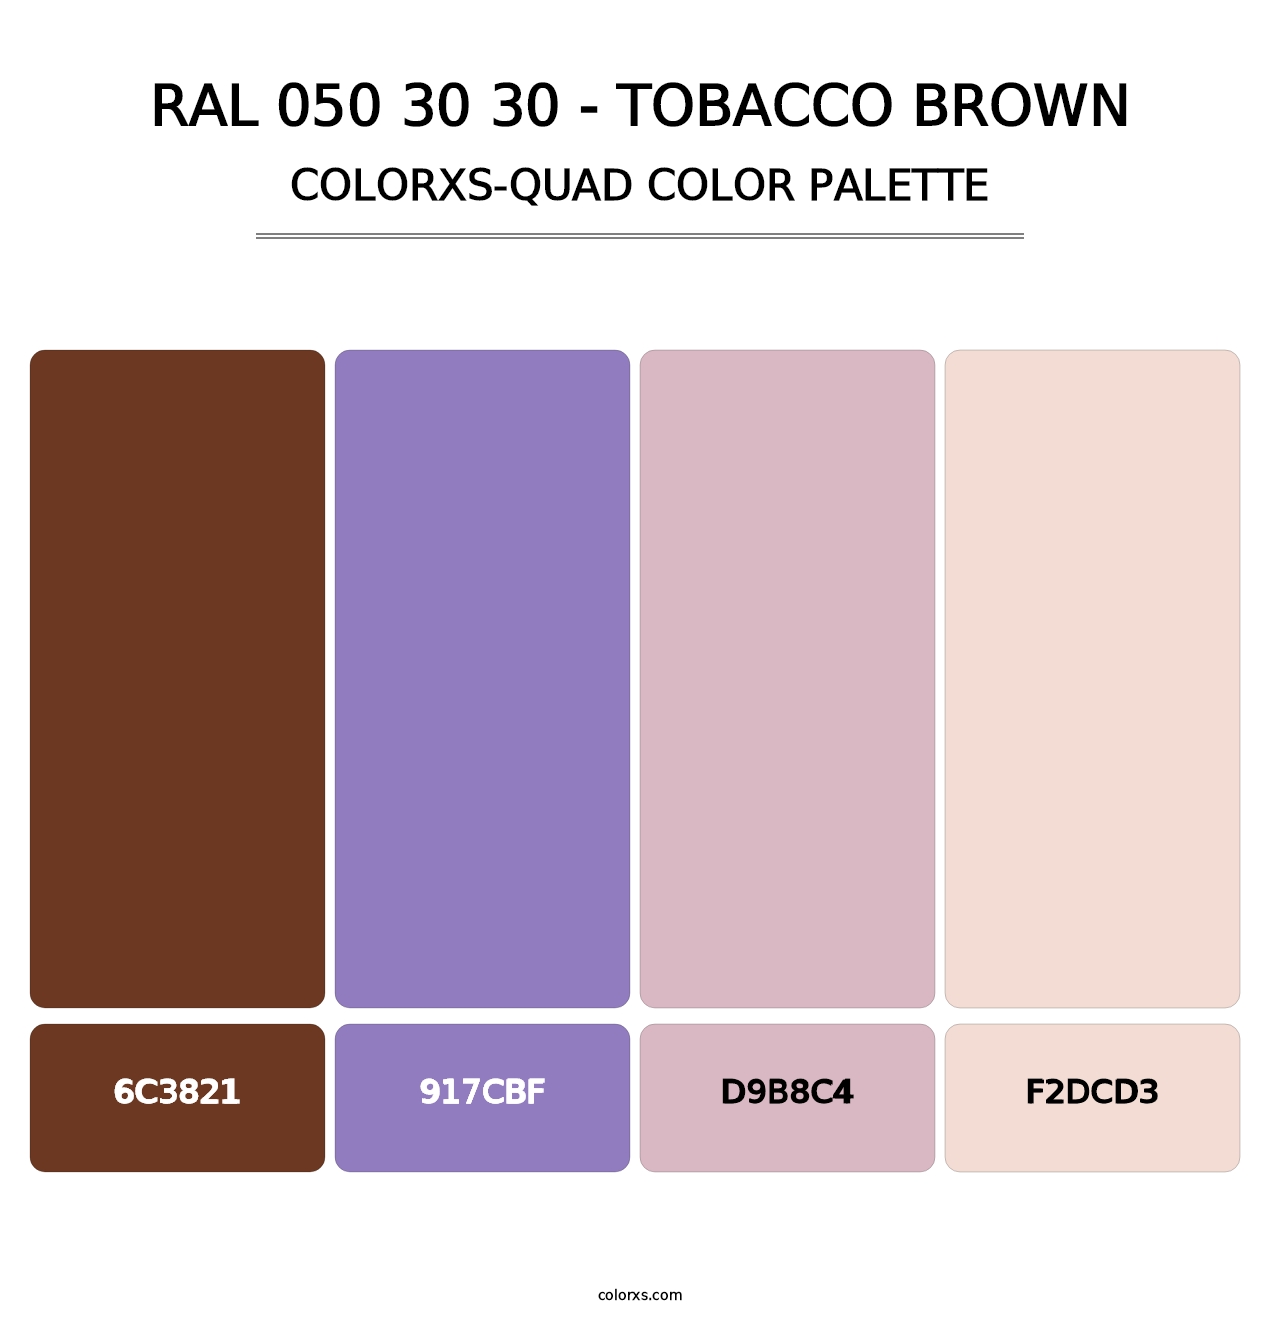 RAL 050 30 30 - Tobacco Brown - Colorxs Quad Palette